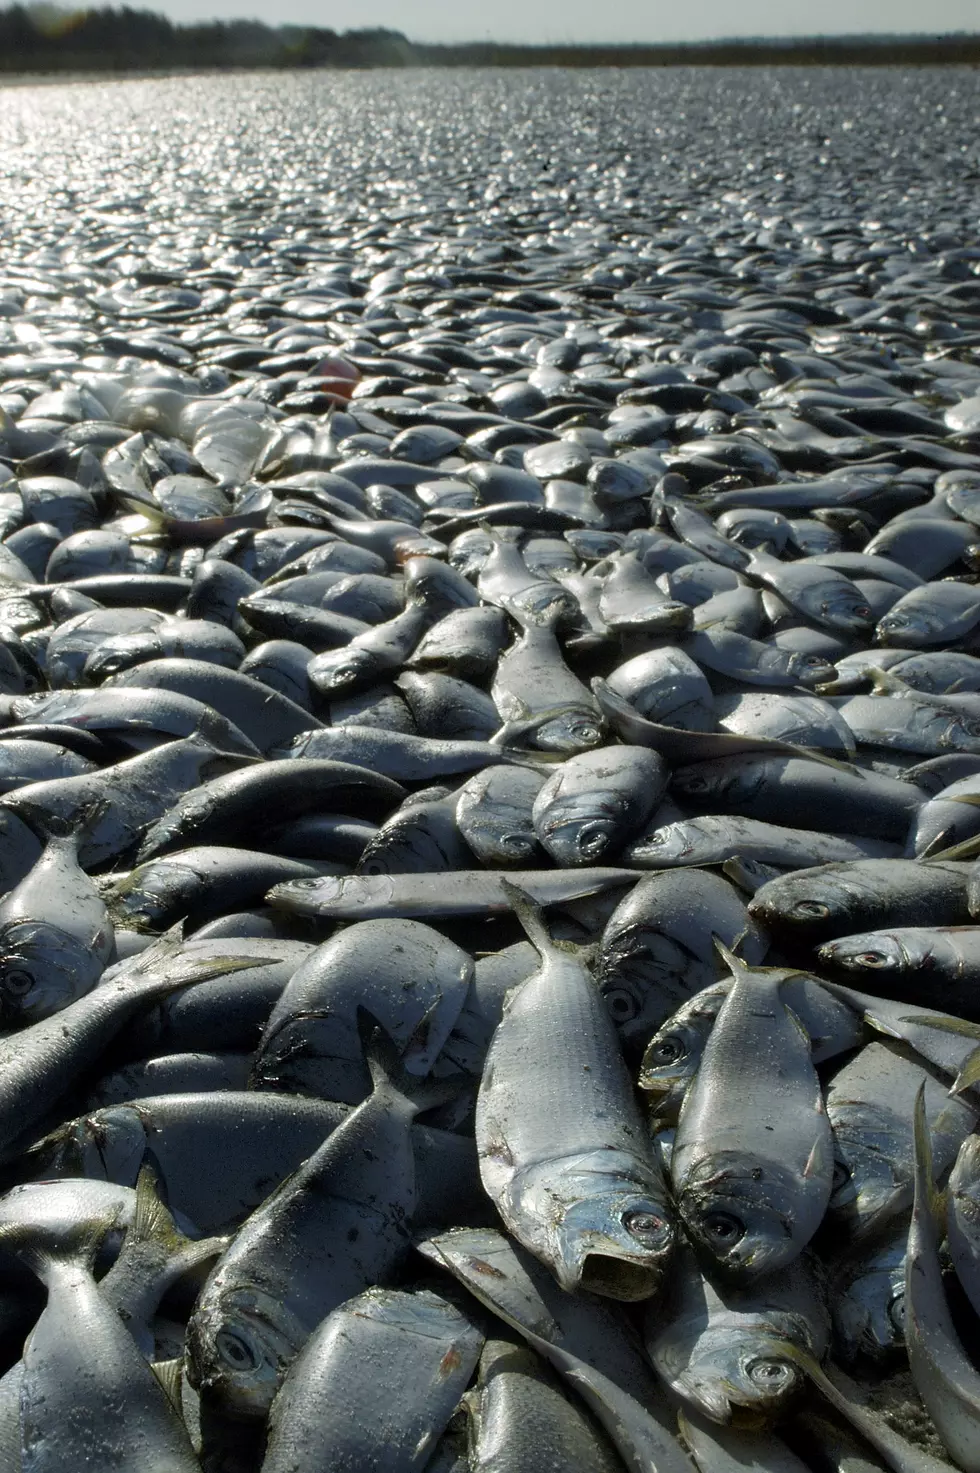 Iowa Fish Kill of 750,000 Due to Fertilizer Leak